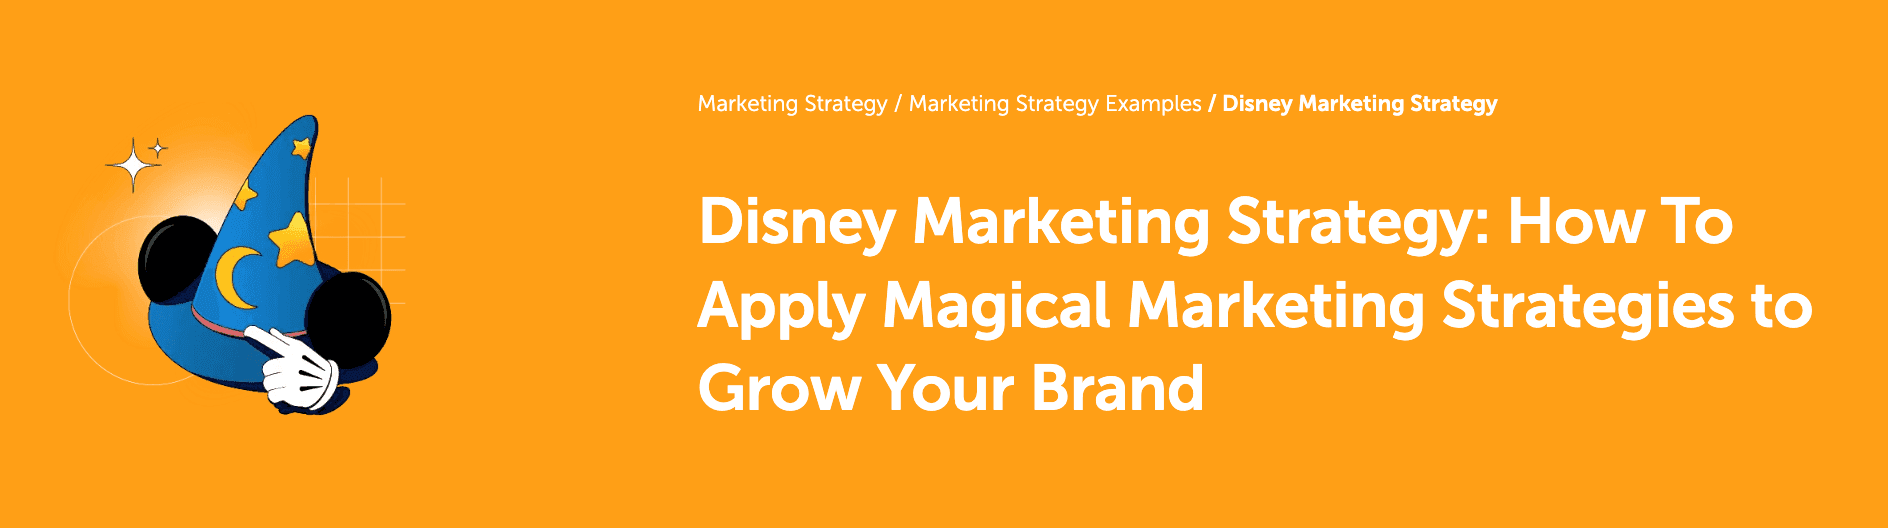 Disney Marketing Strategy marketing hub page headline